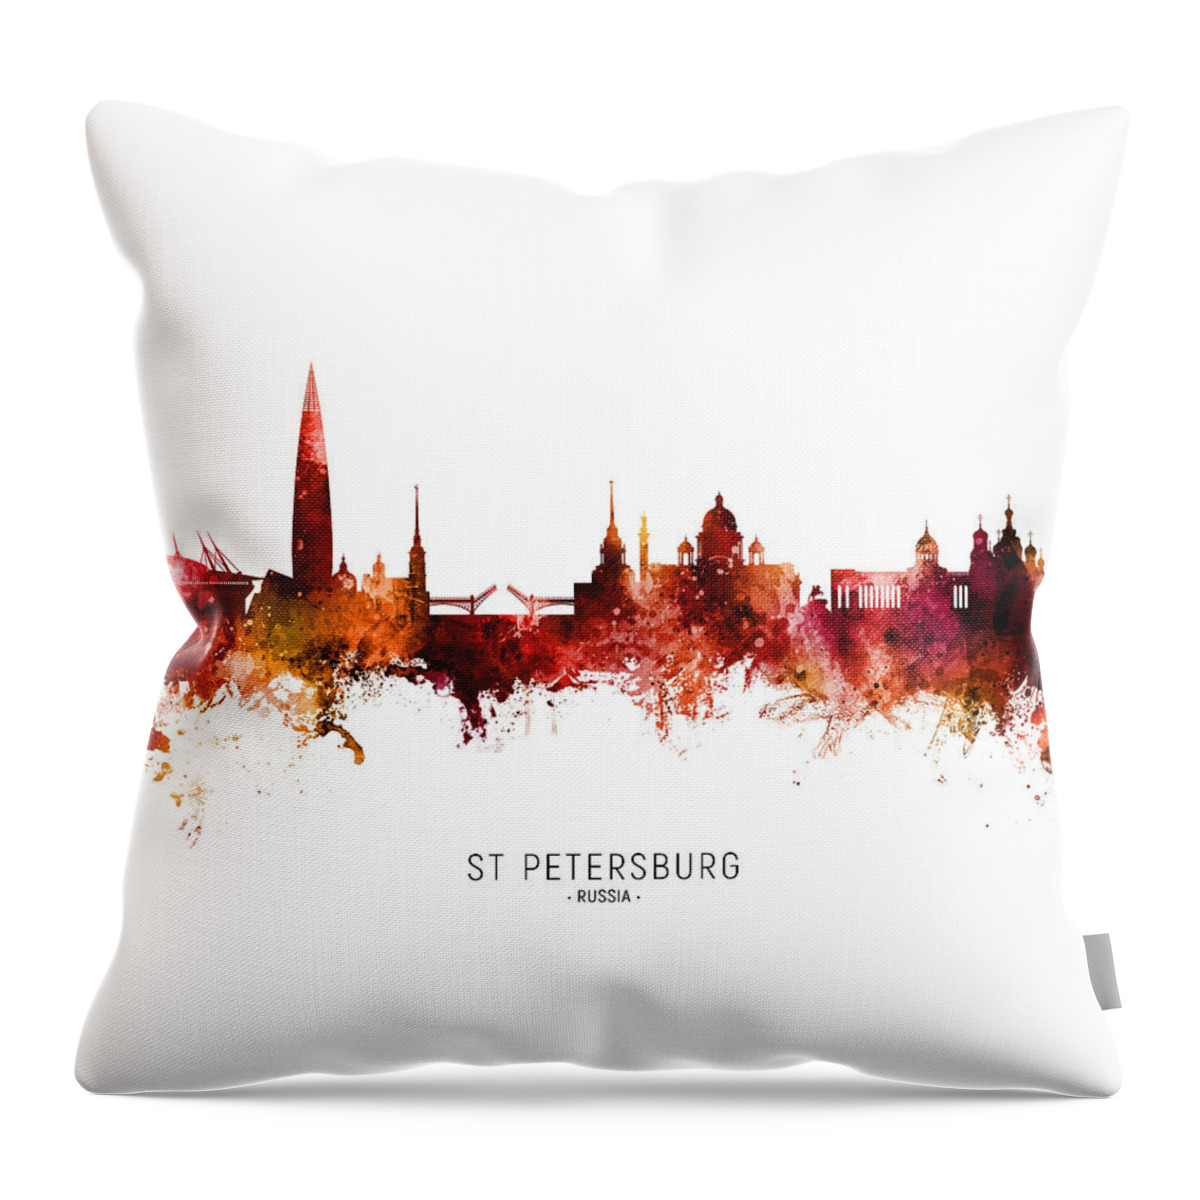 St Petersburg Throw Pillow featuring the digital art St Petersburg Russia Skyline #38 by Michael Tompsett